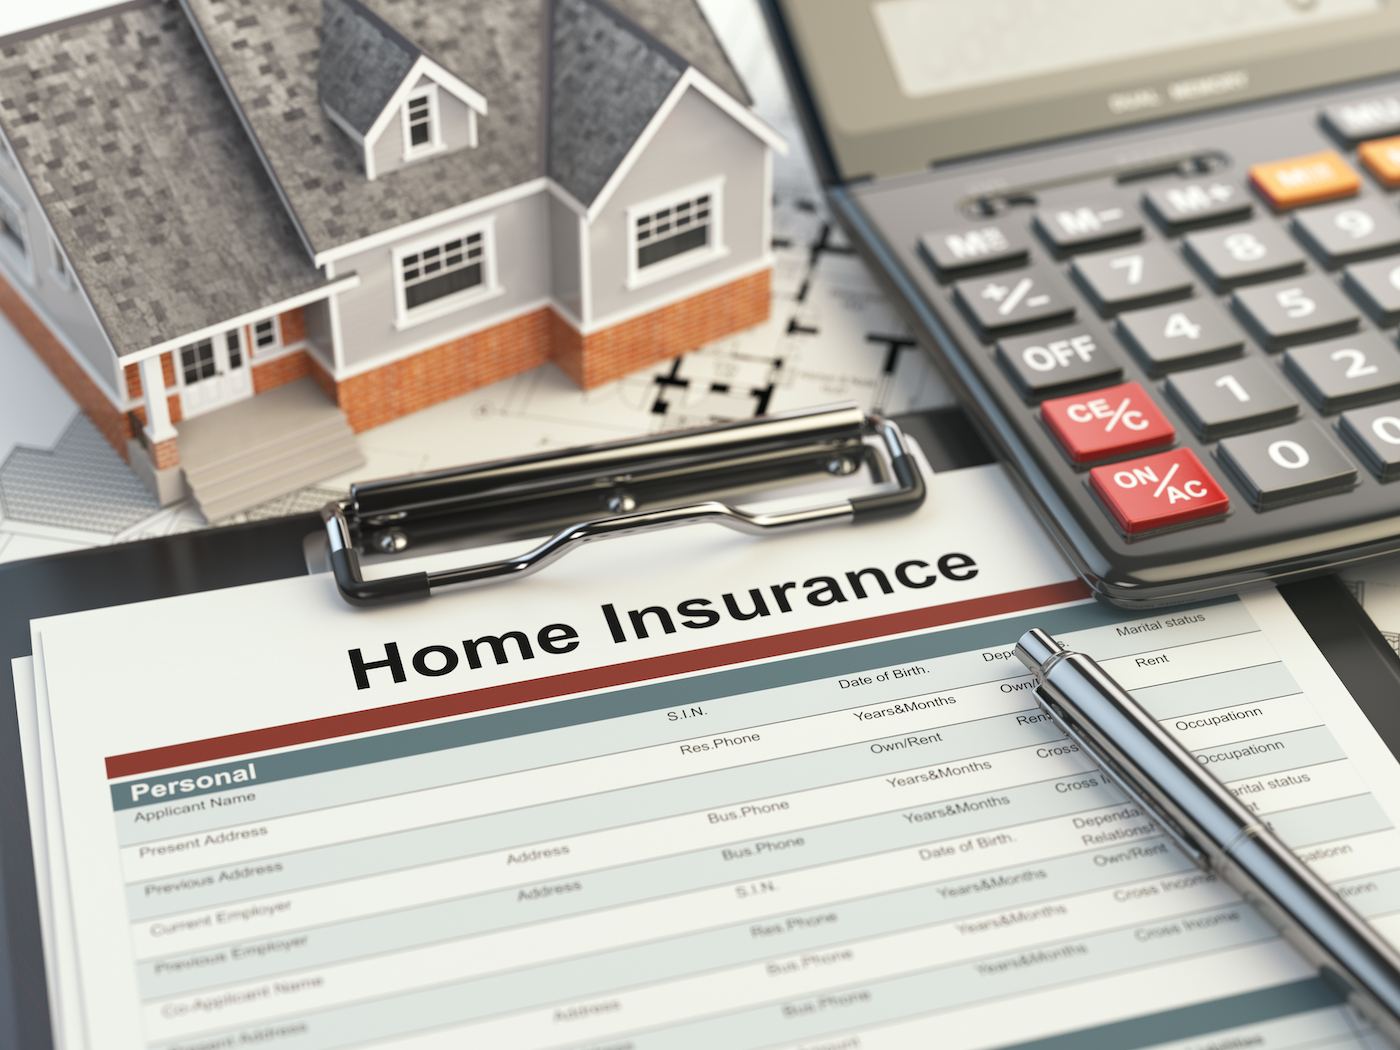 Home insurance to file a damage claim